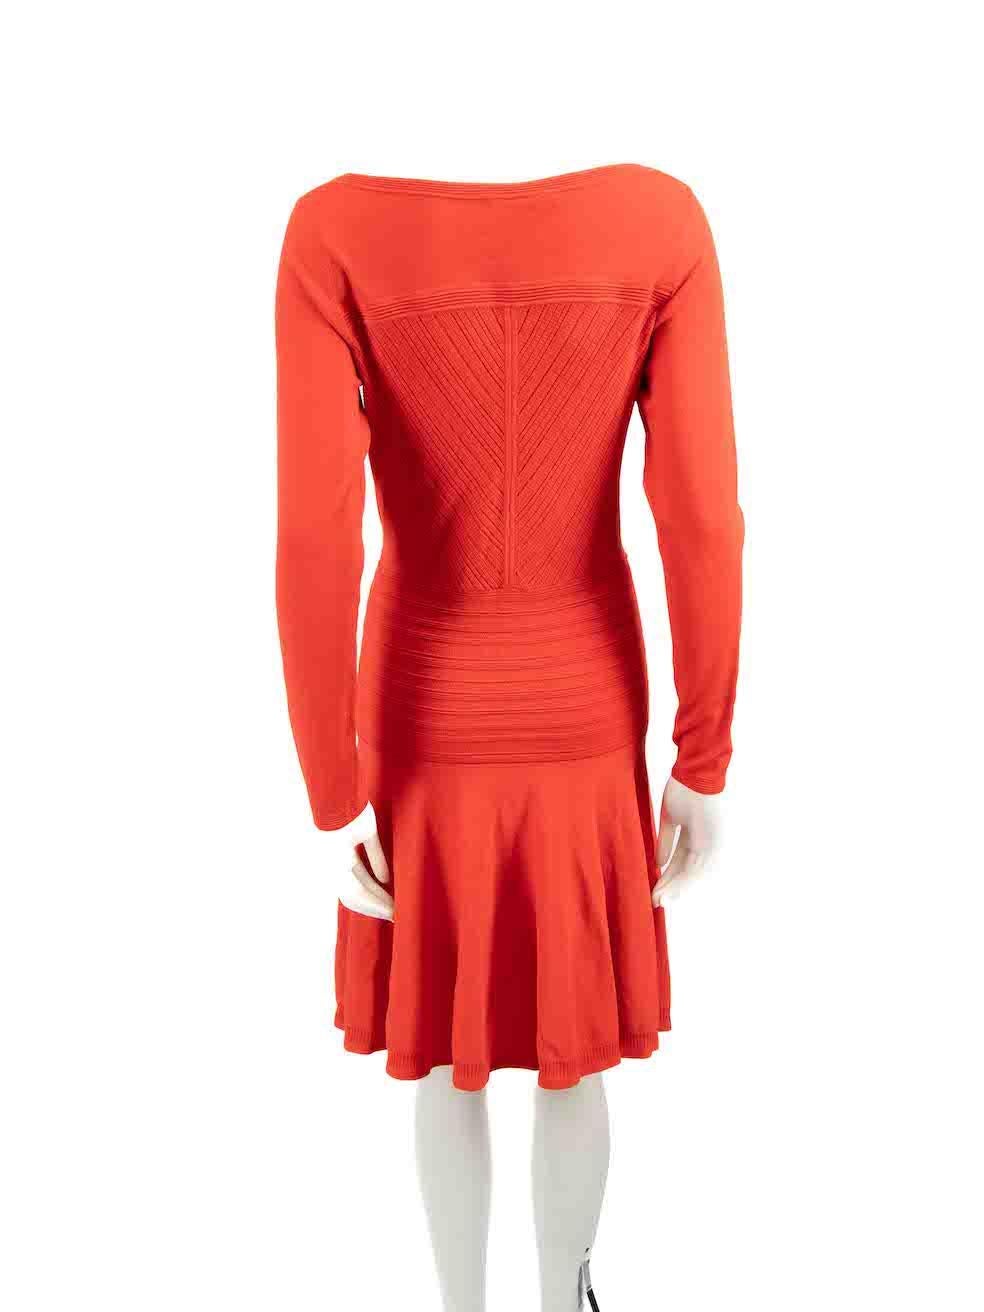 Diane Von Furstenberg Red Delta Knee Length Dress Size S In Excellent Condition For Sale In London, GB